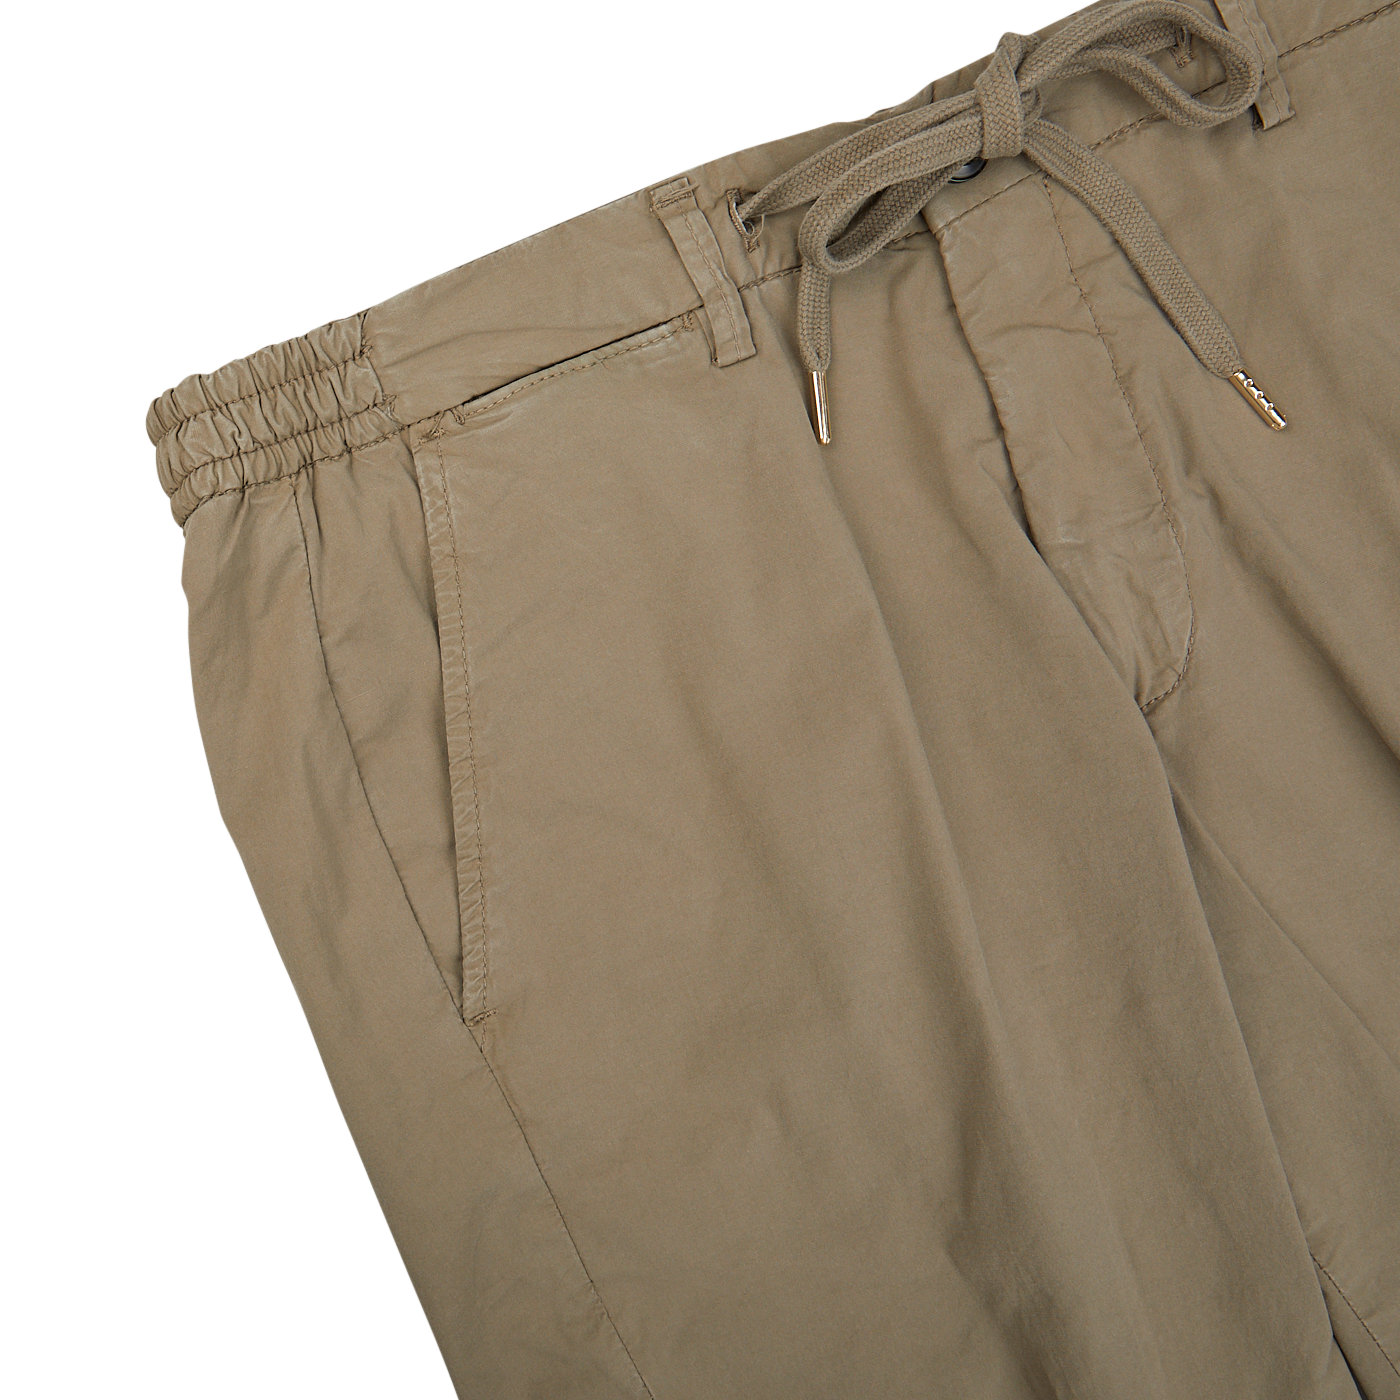 A pair of Briglia Olive Green Cotton Drawstring Malibu Shorts.